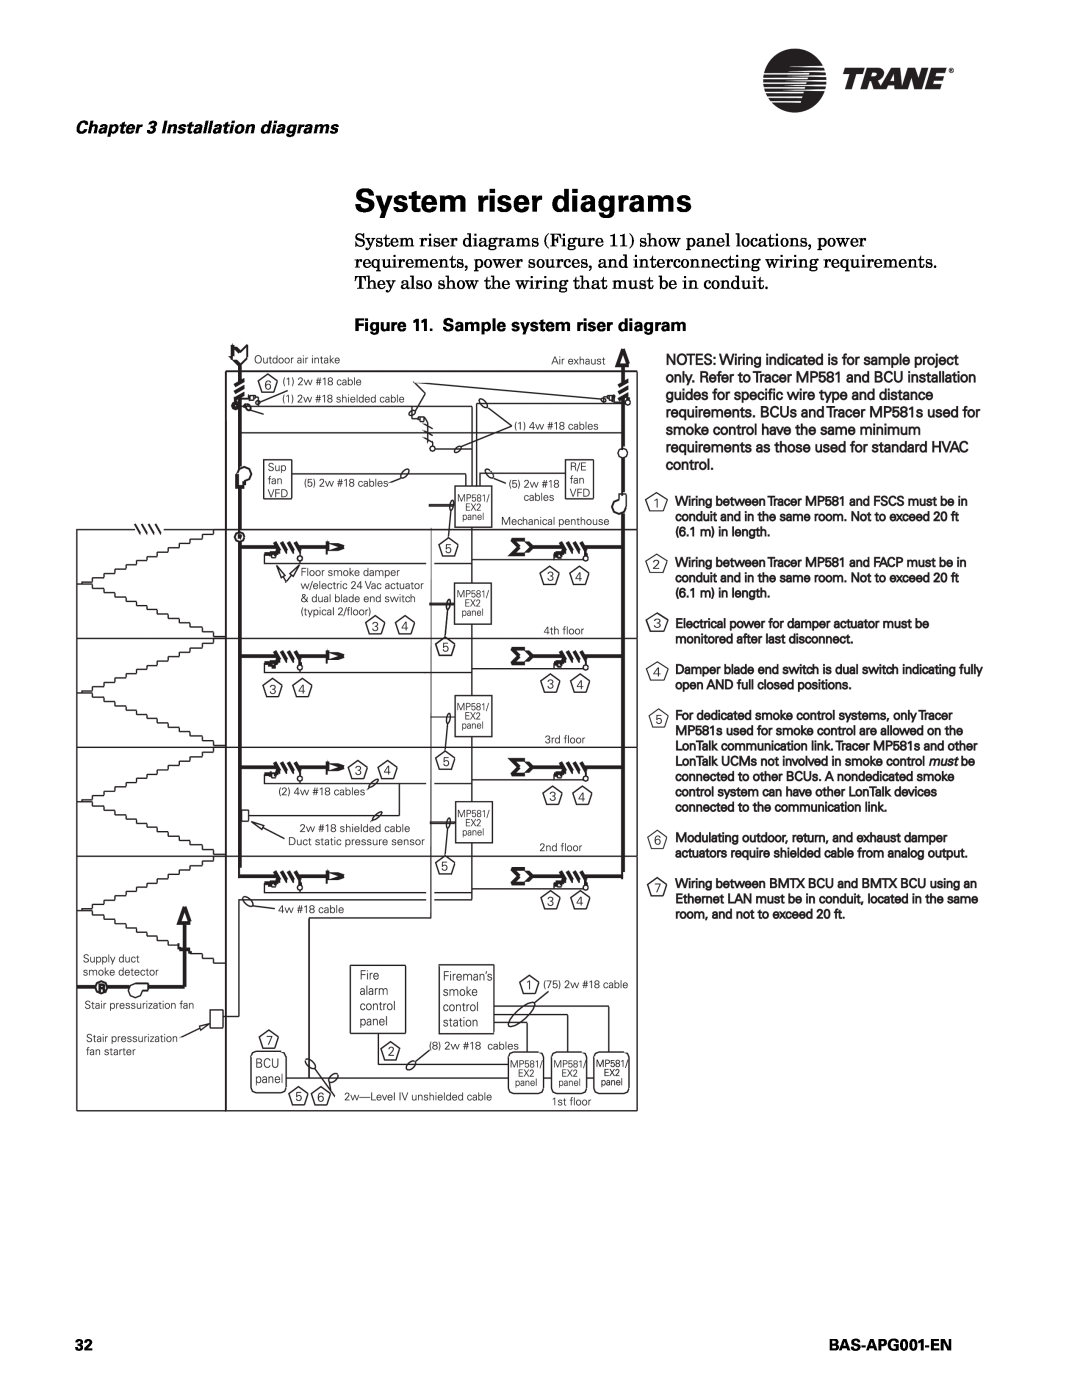 Trane BAS-APG001-EN, Engineered Smoke Control System for Tracer Summit manual System riser diagrams, Installation diagrams 